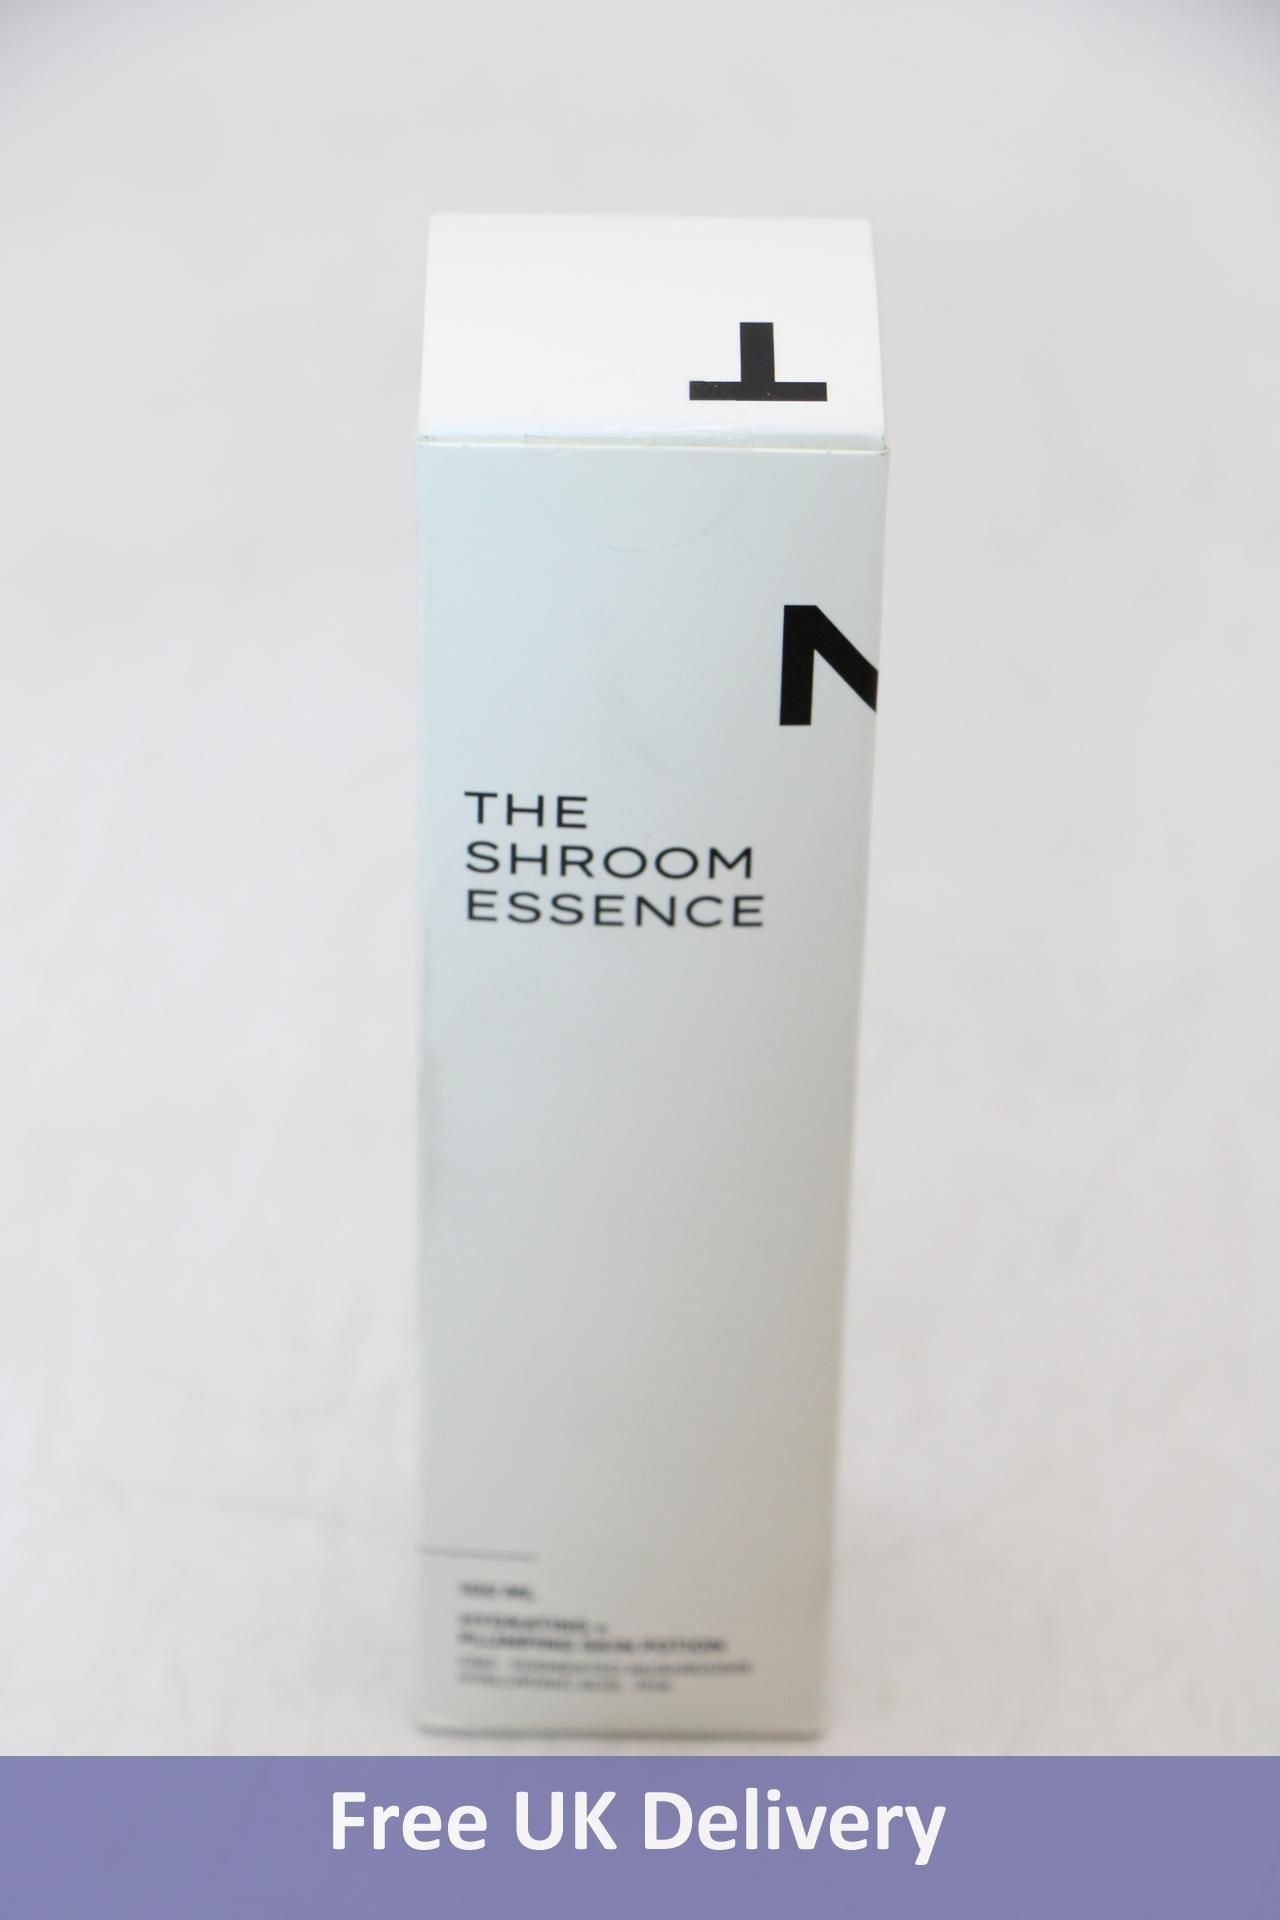 Ten Mantle The Shroom Essence Bottle Hydrating x Plumping Skin Potion Cbd, Size 100ml